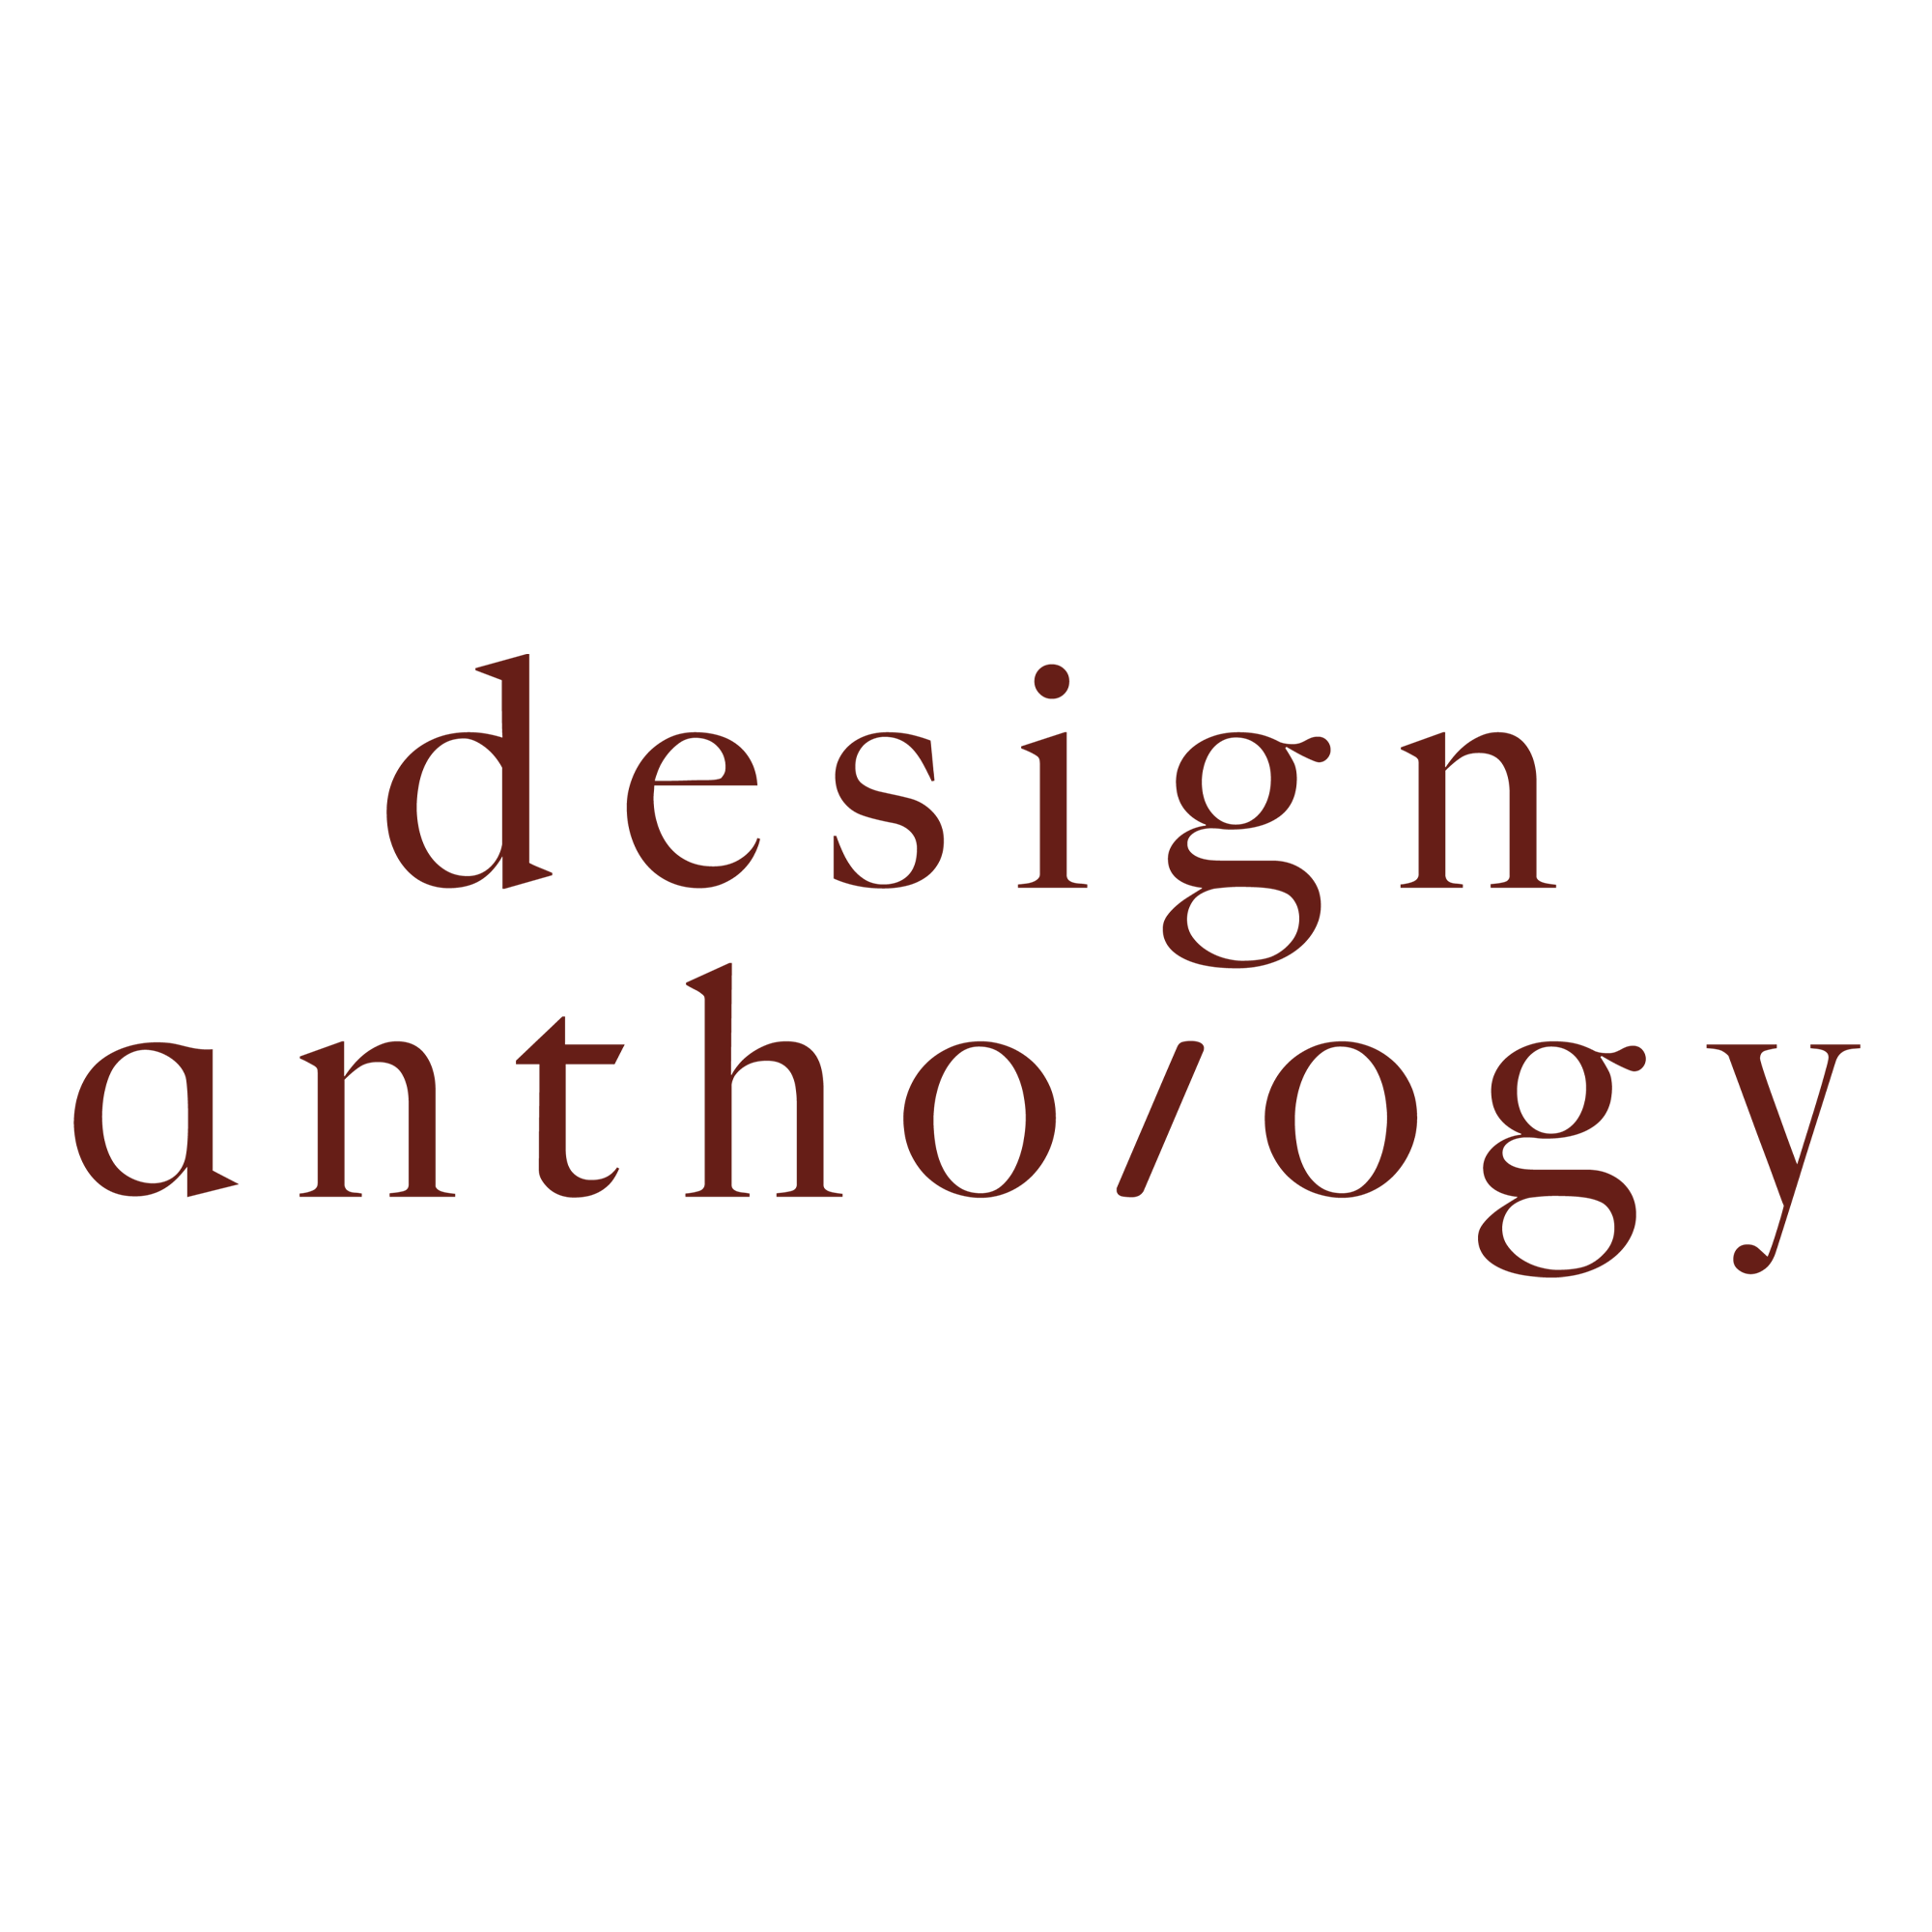 Alexis-Dupont-Interiors-Design_Anthology-logo.png